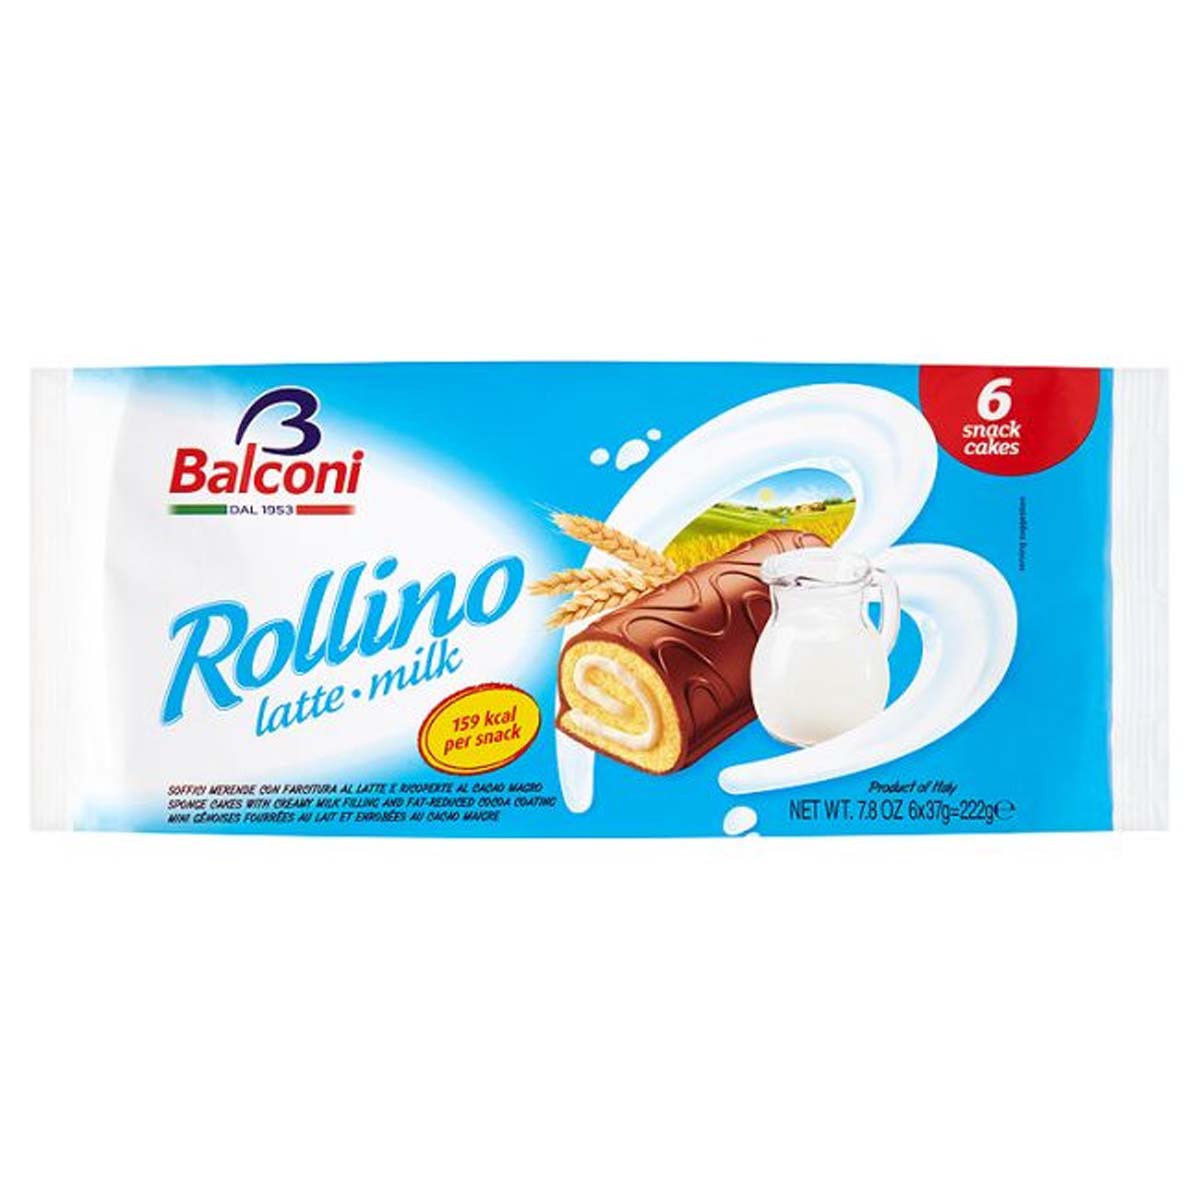 Balconi - Pastry Roll Rollino Milk - 222g - Continental Food Store